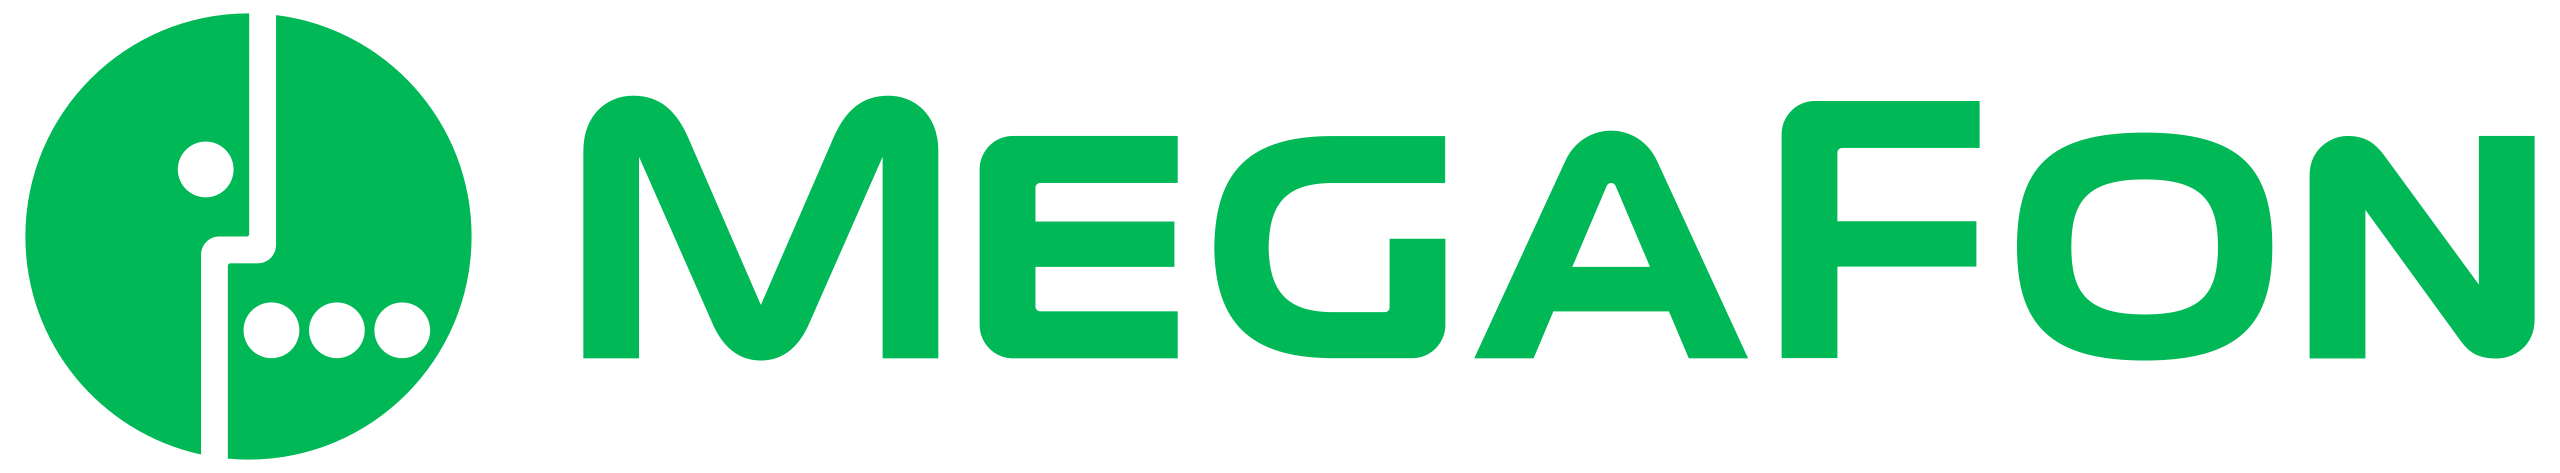 File:MegaFon logo.svg - Wikipedia